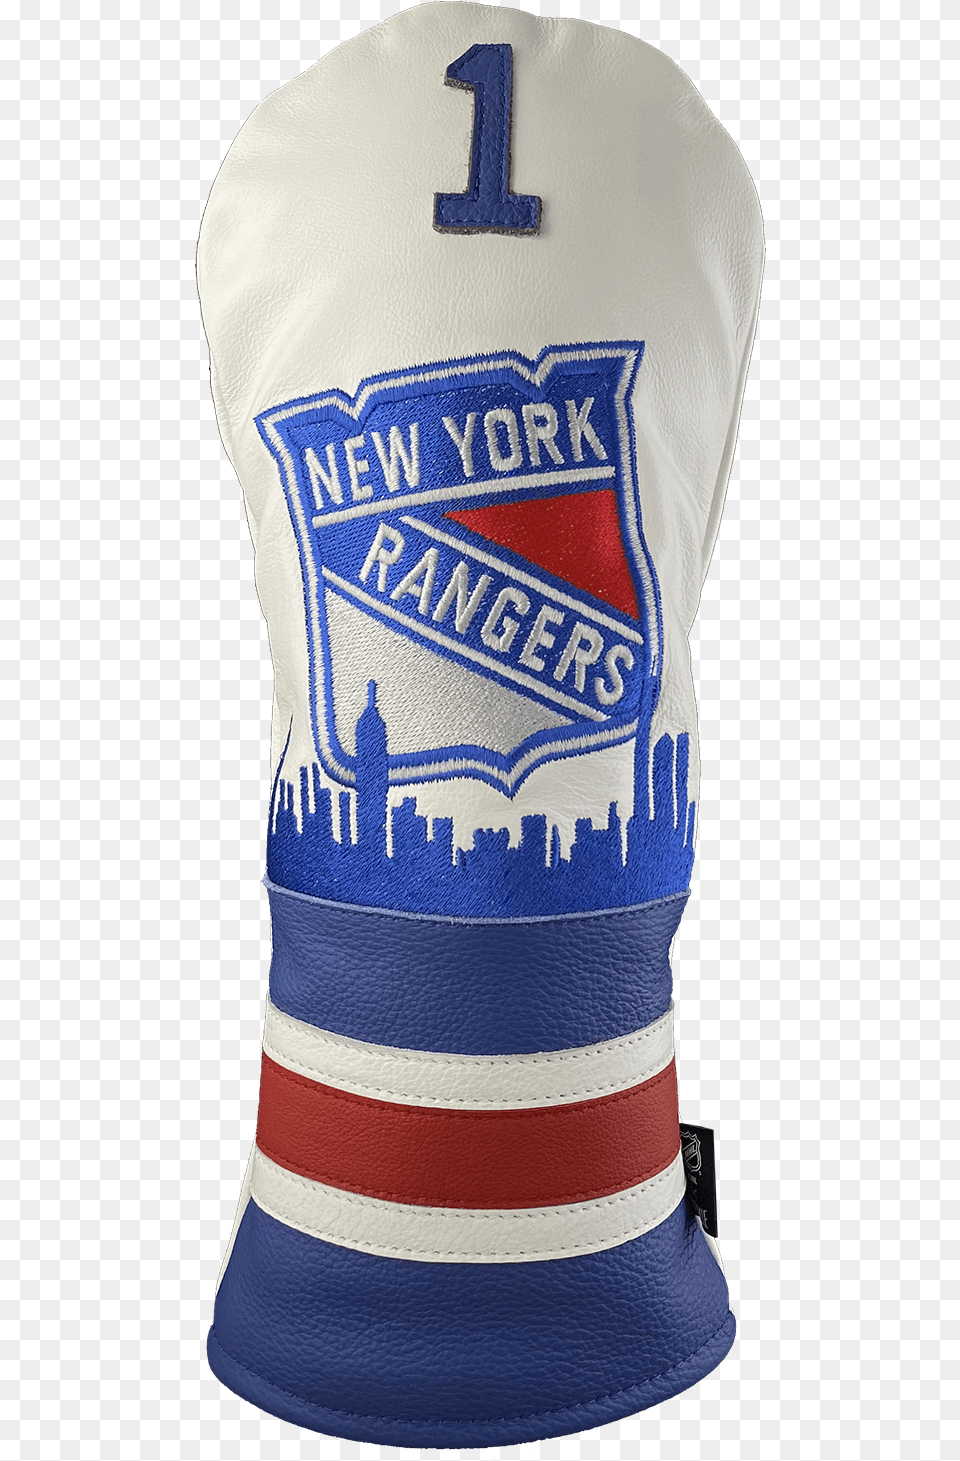 New York Rangers Primo American, Clothing, Shirt, Hat, Cap Png Image